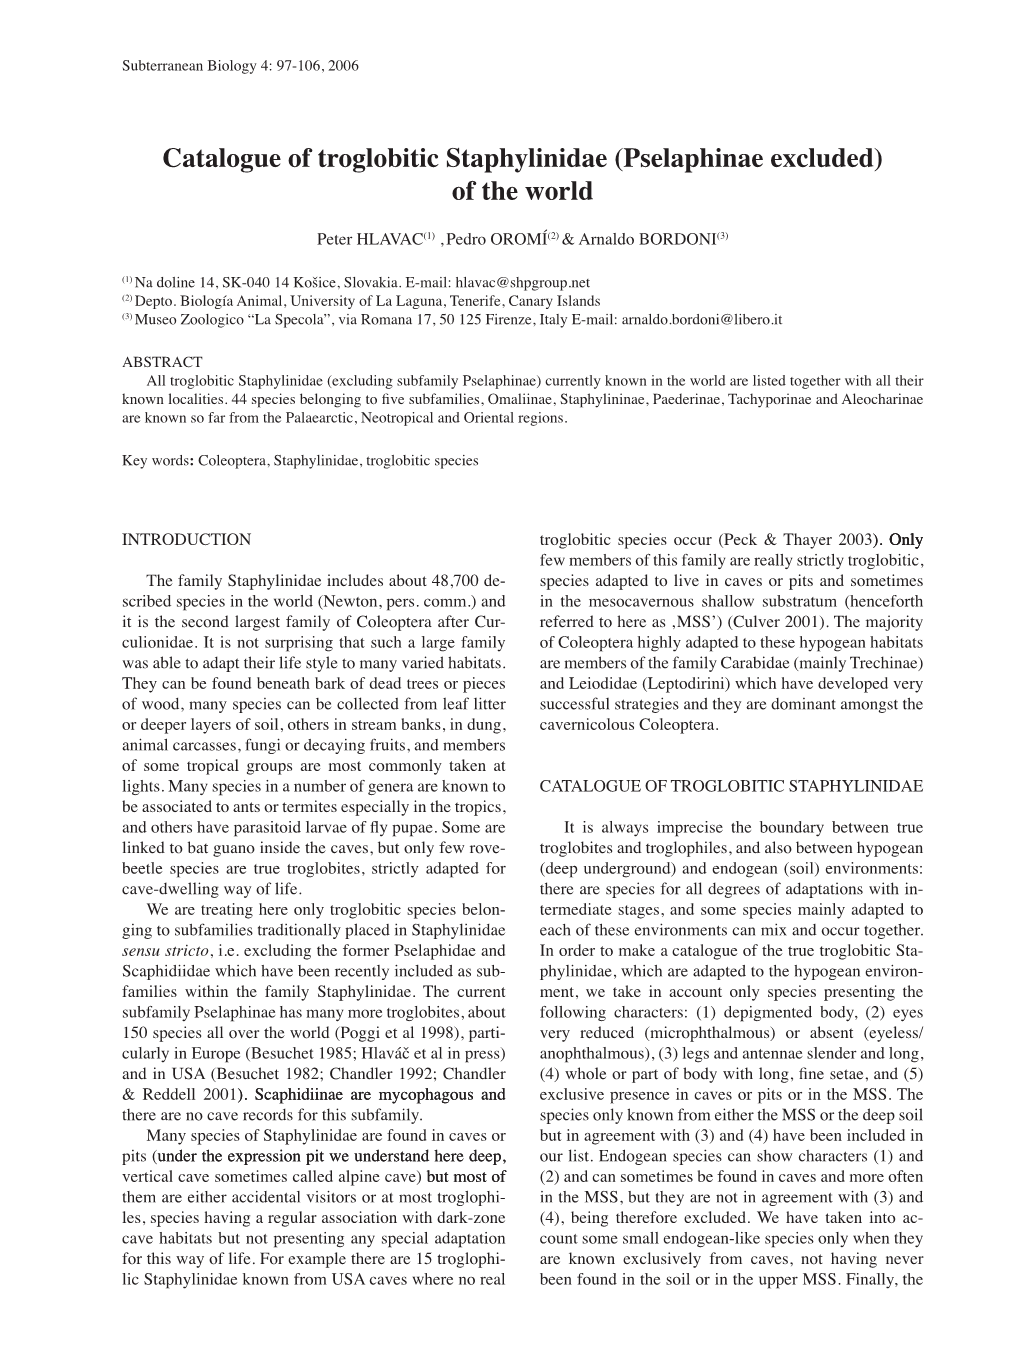 Catalogue of Troglobitic Staphylinidae (Pselaphinae Excluded) of the World